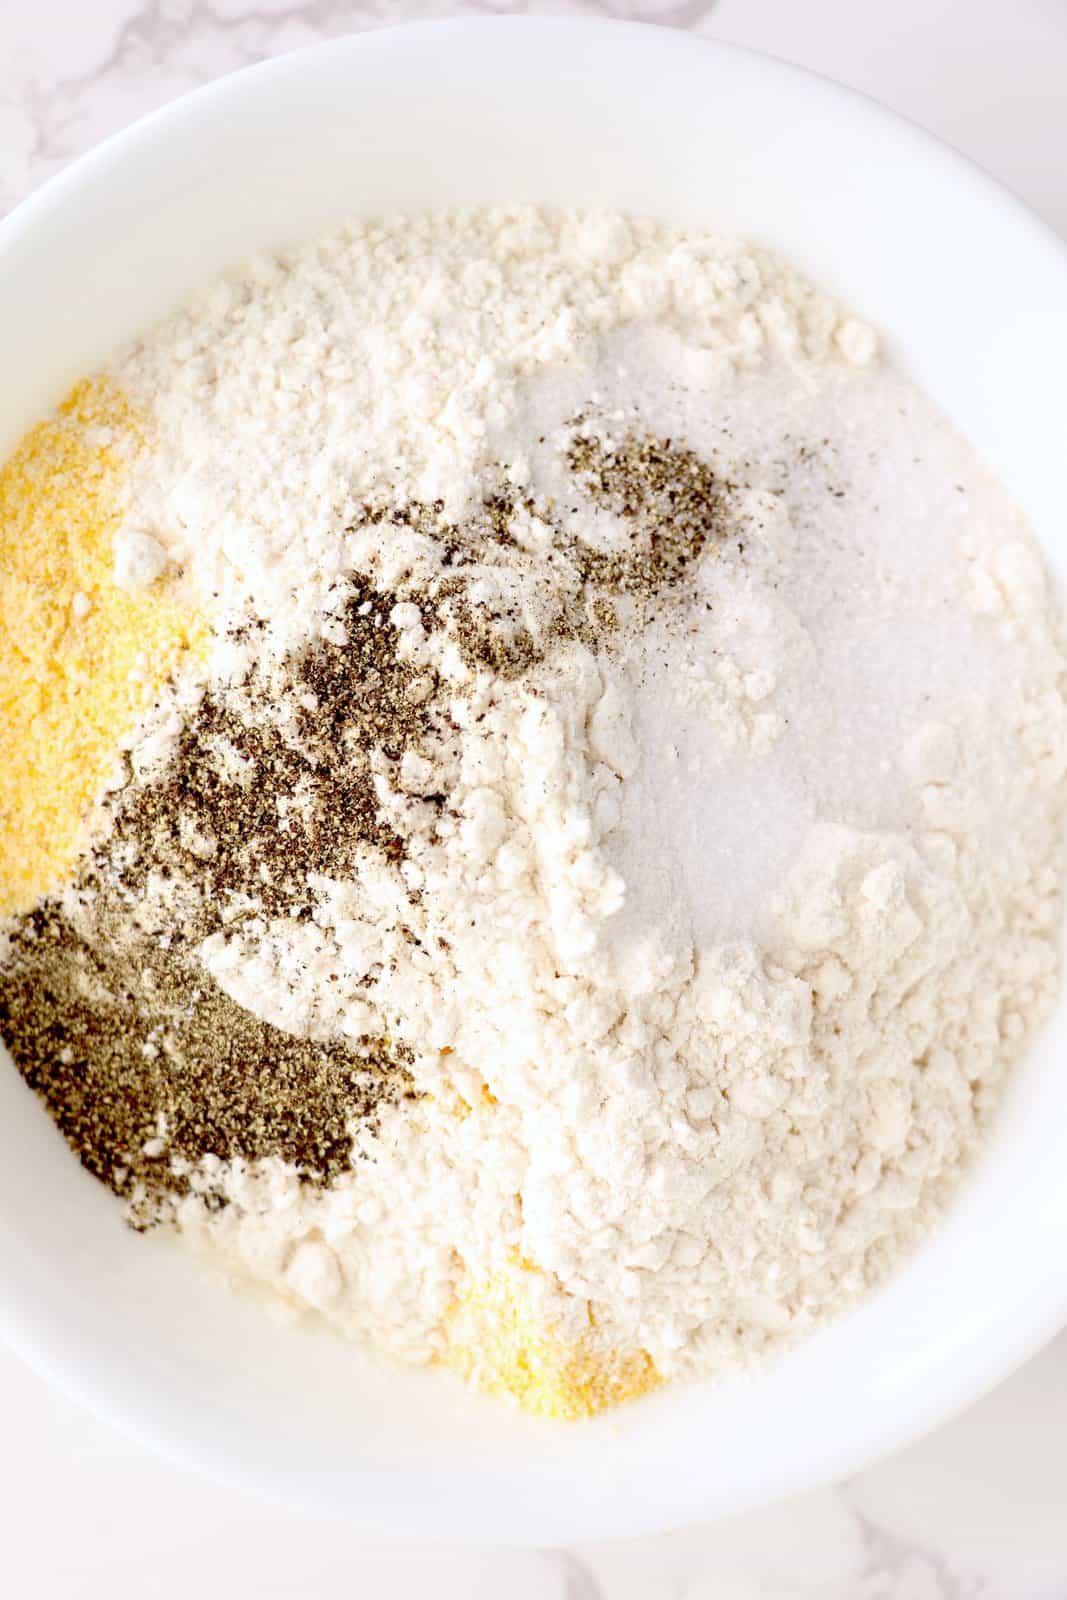 A mixing bowl with flour, garlic powder, cornmeal, parmesan cheese, salt and pepper.